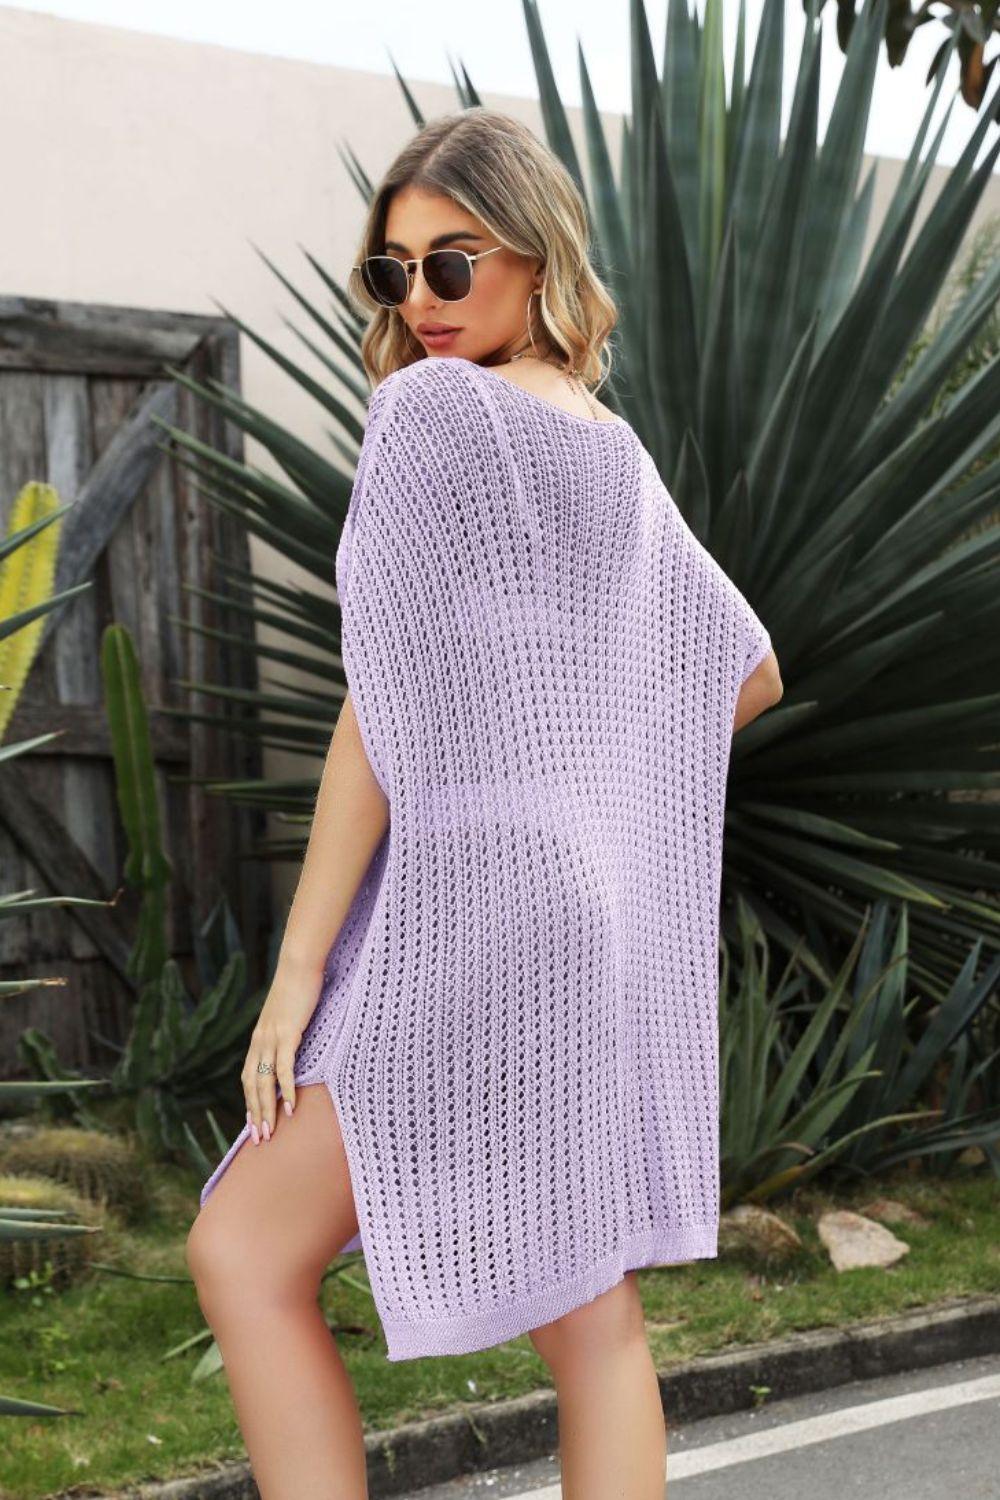 Good Times Openwork Crochet Beach Cover-Up Dress - MXSTUDIO.COM